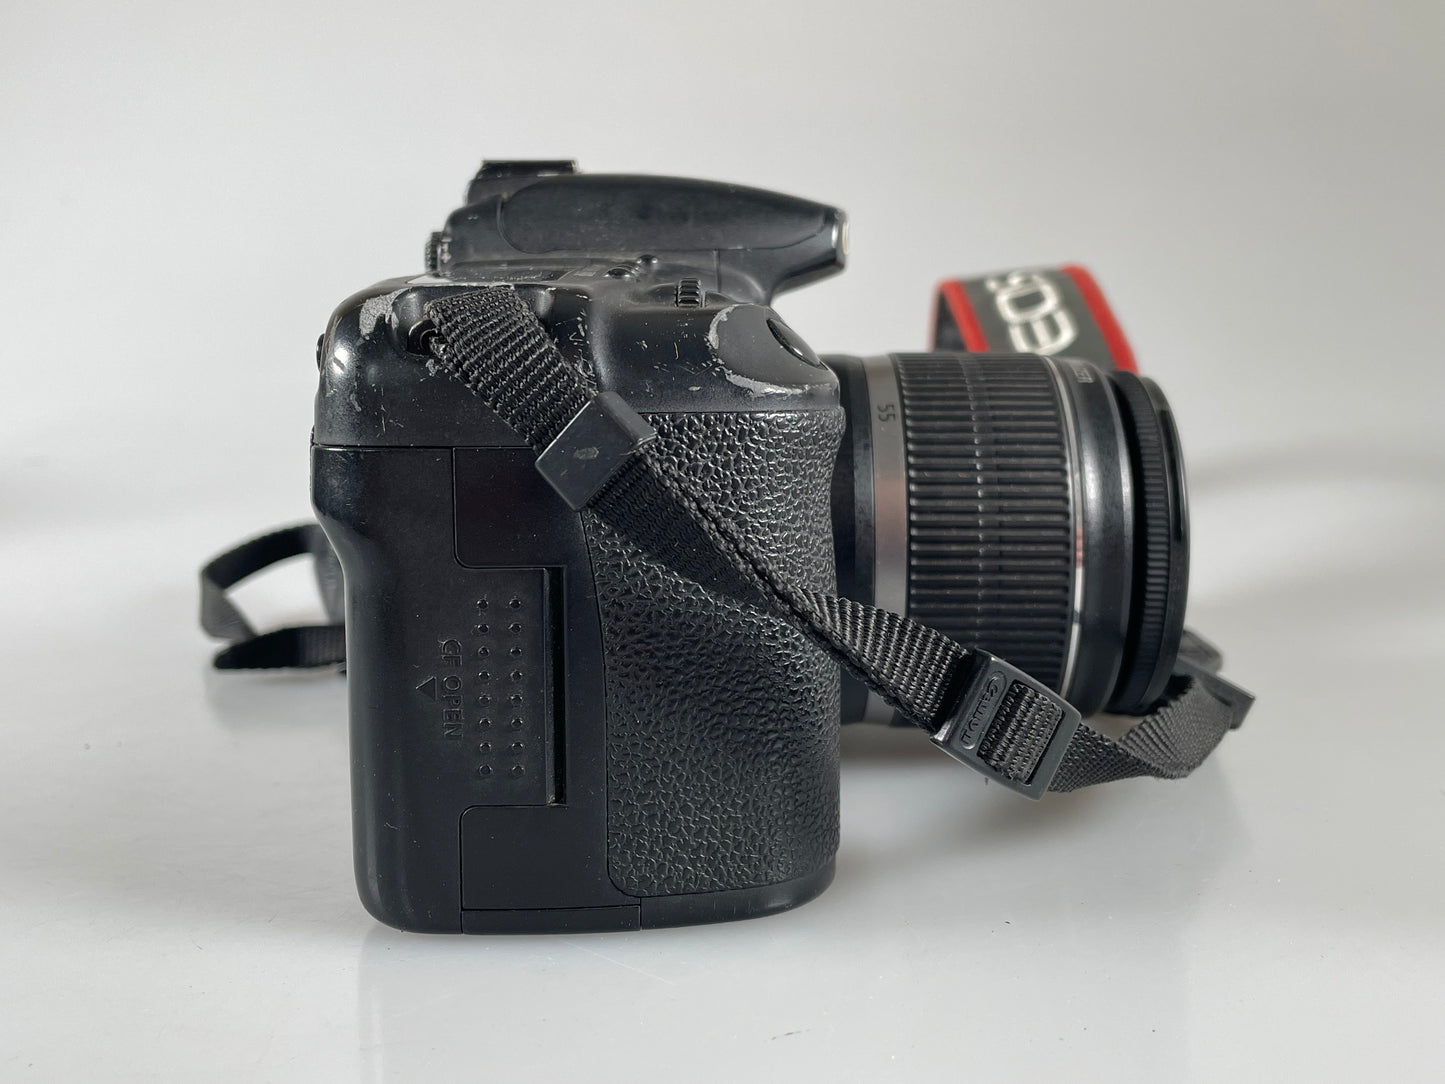 Canon 20D Digital SLR Camera Body with 18-55mm lens kit